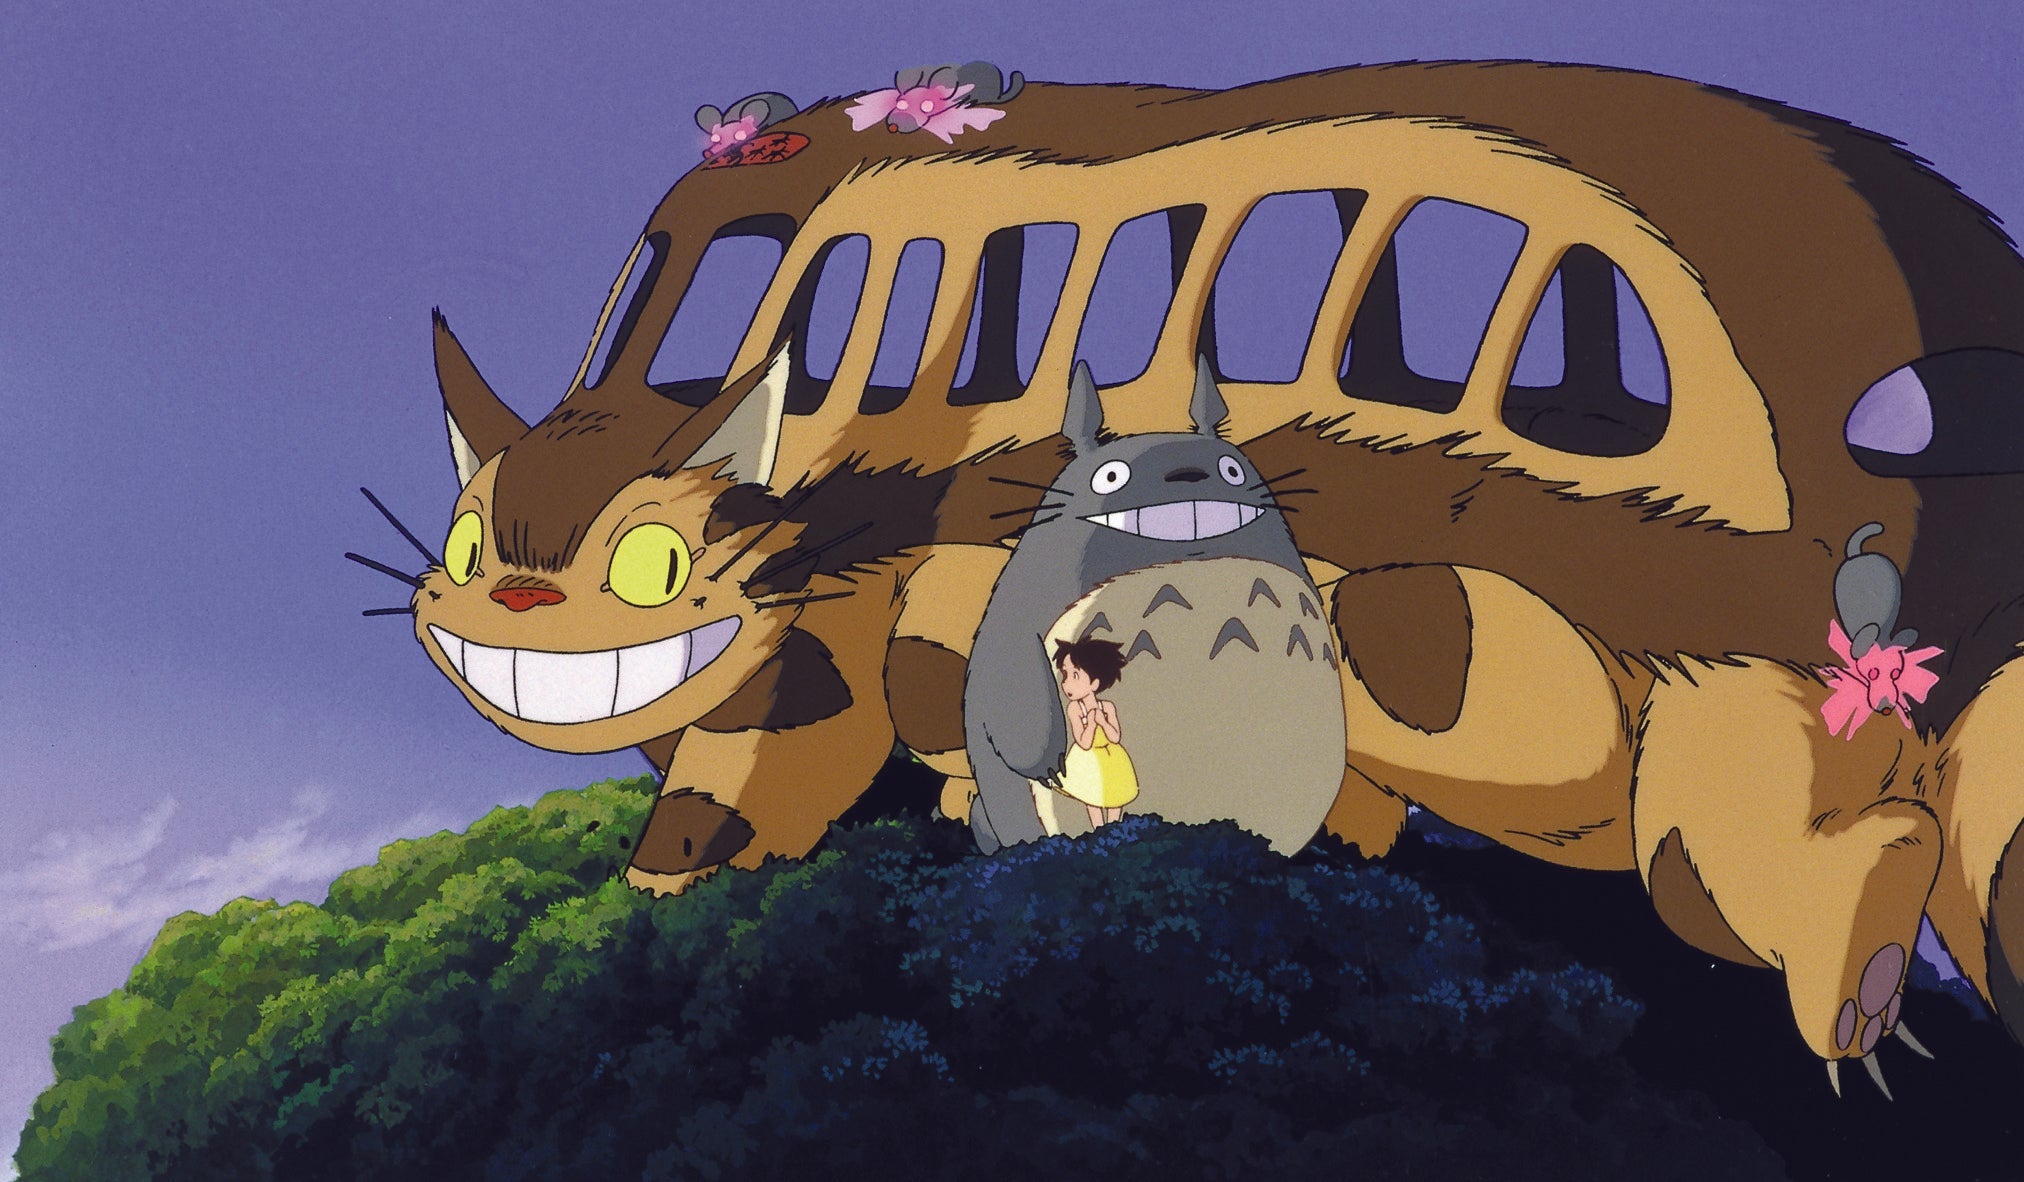 Mon Voisin Totoro DVD / Studio Ghibli #8 by Hayao Miyazaki